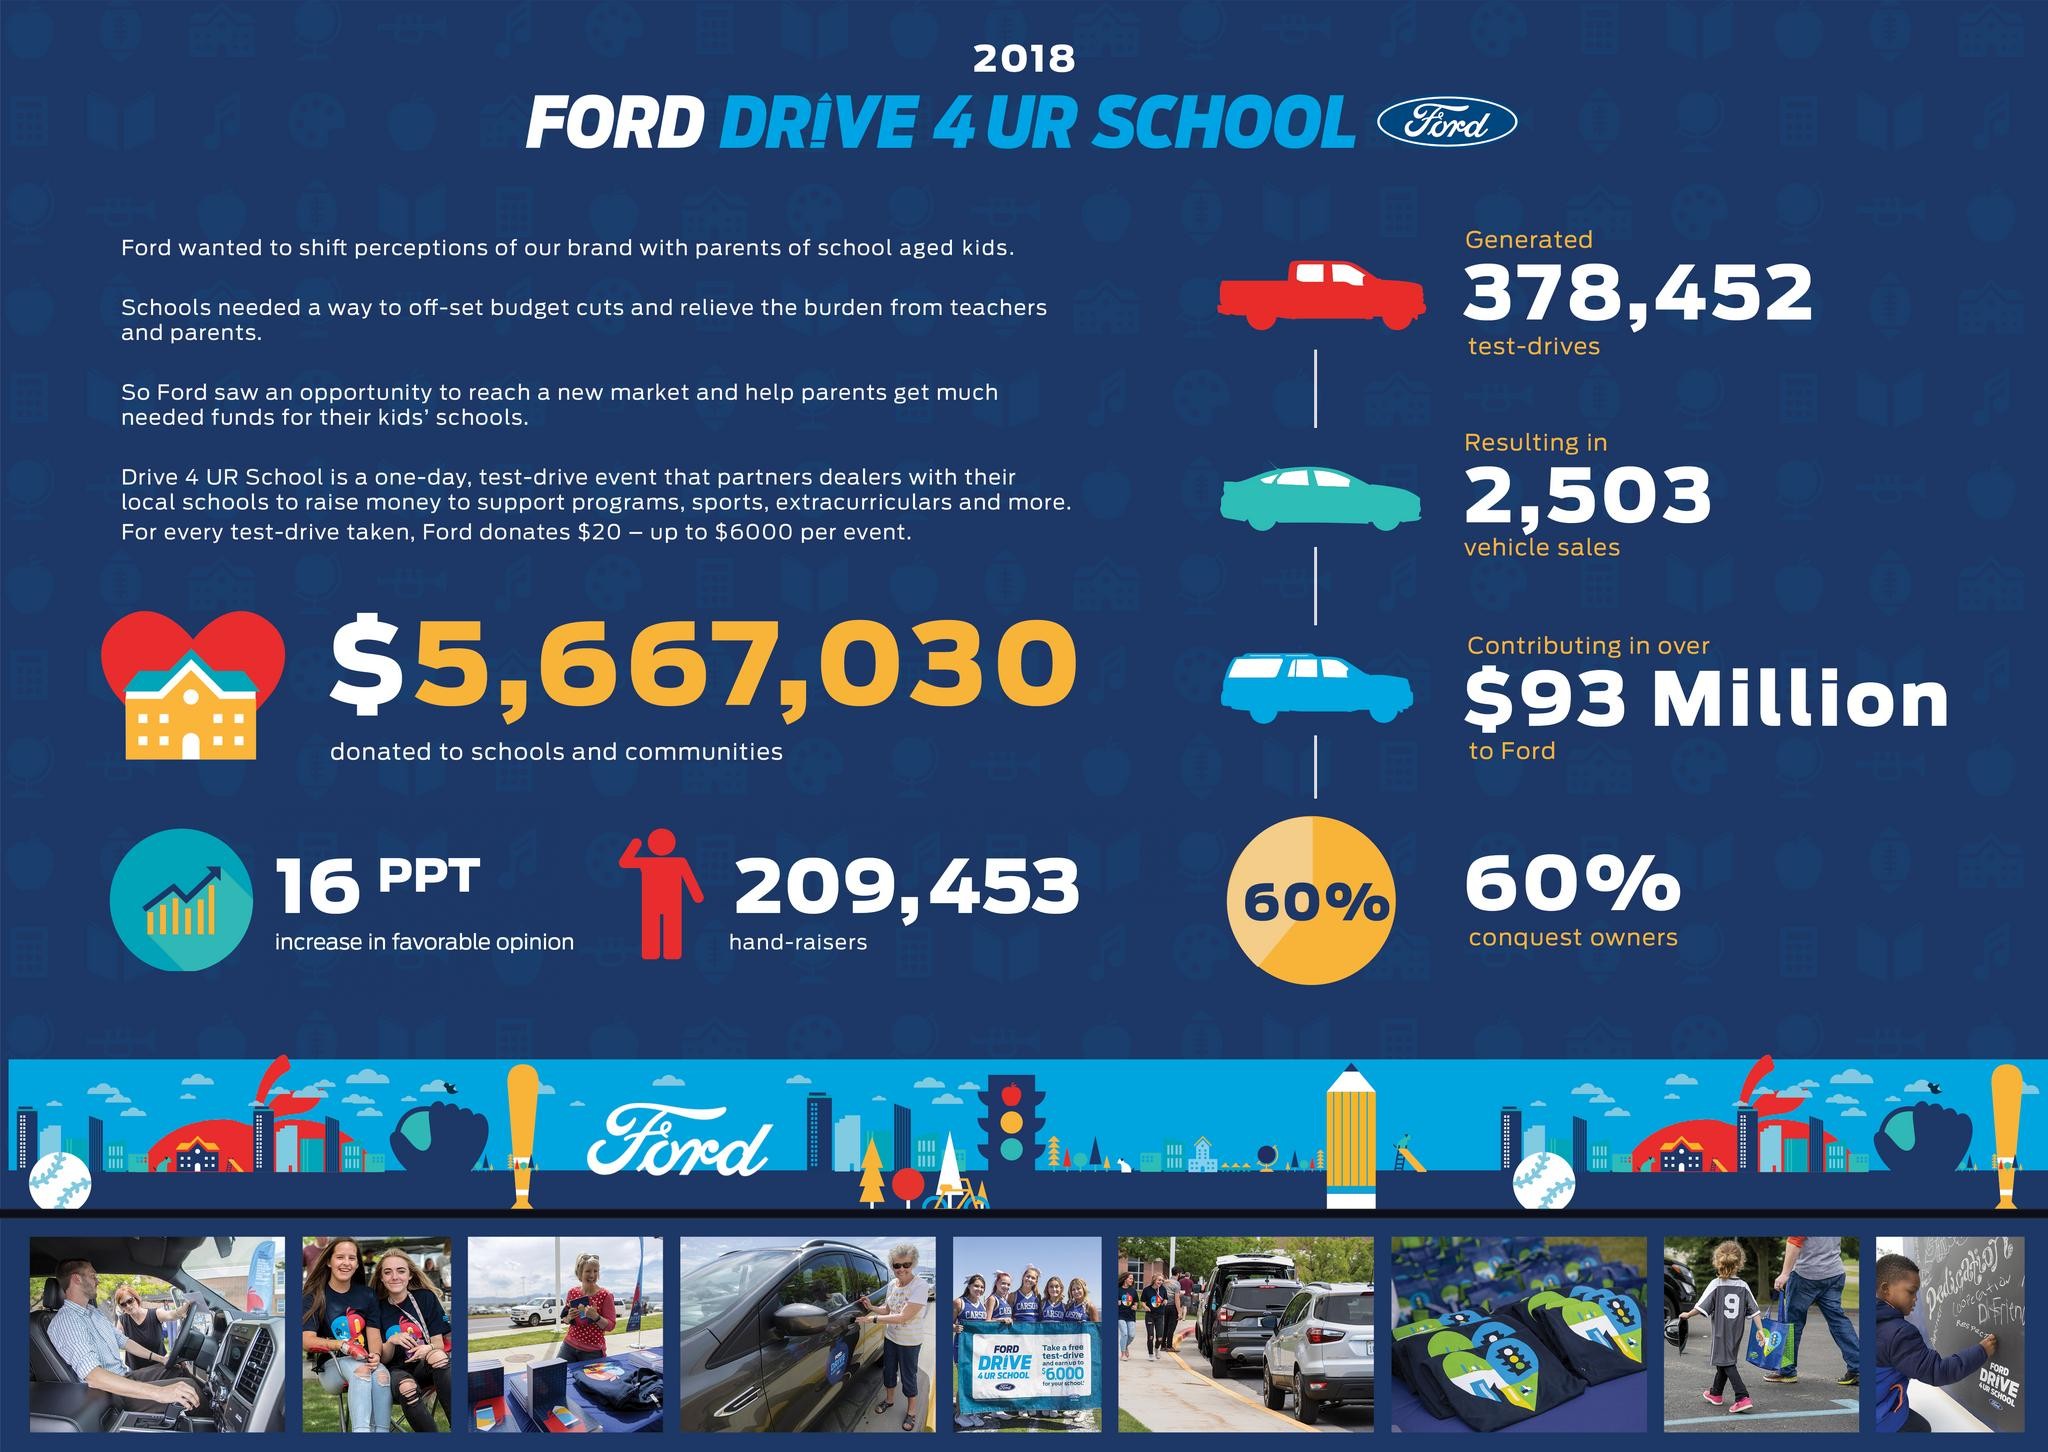 Ford Drive 4 UR School